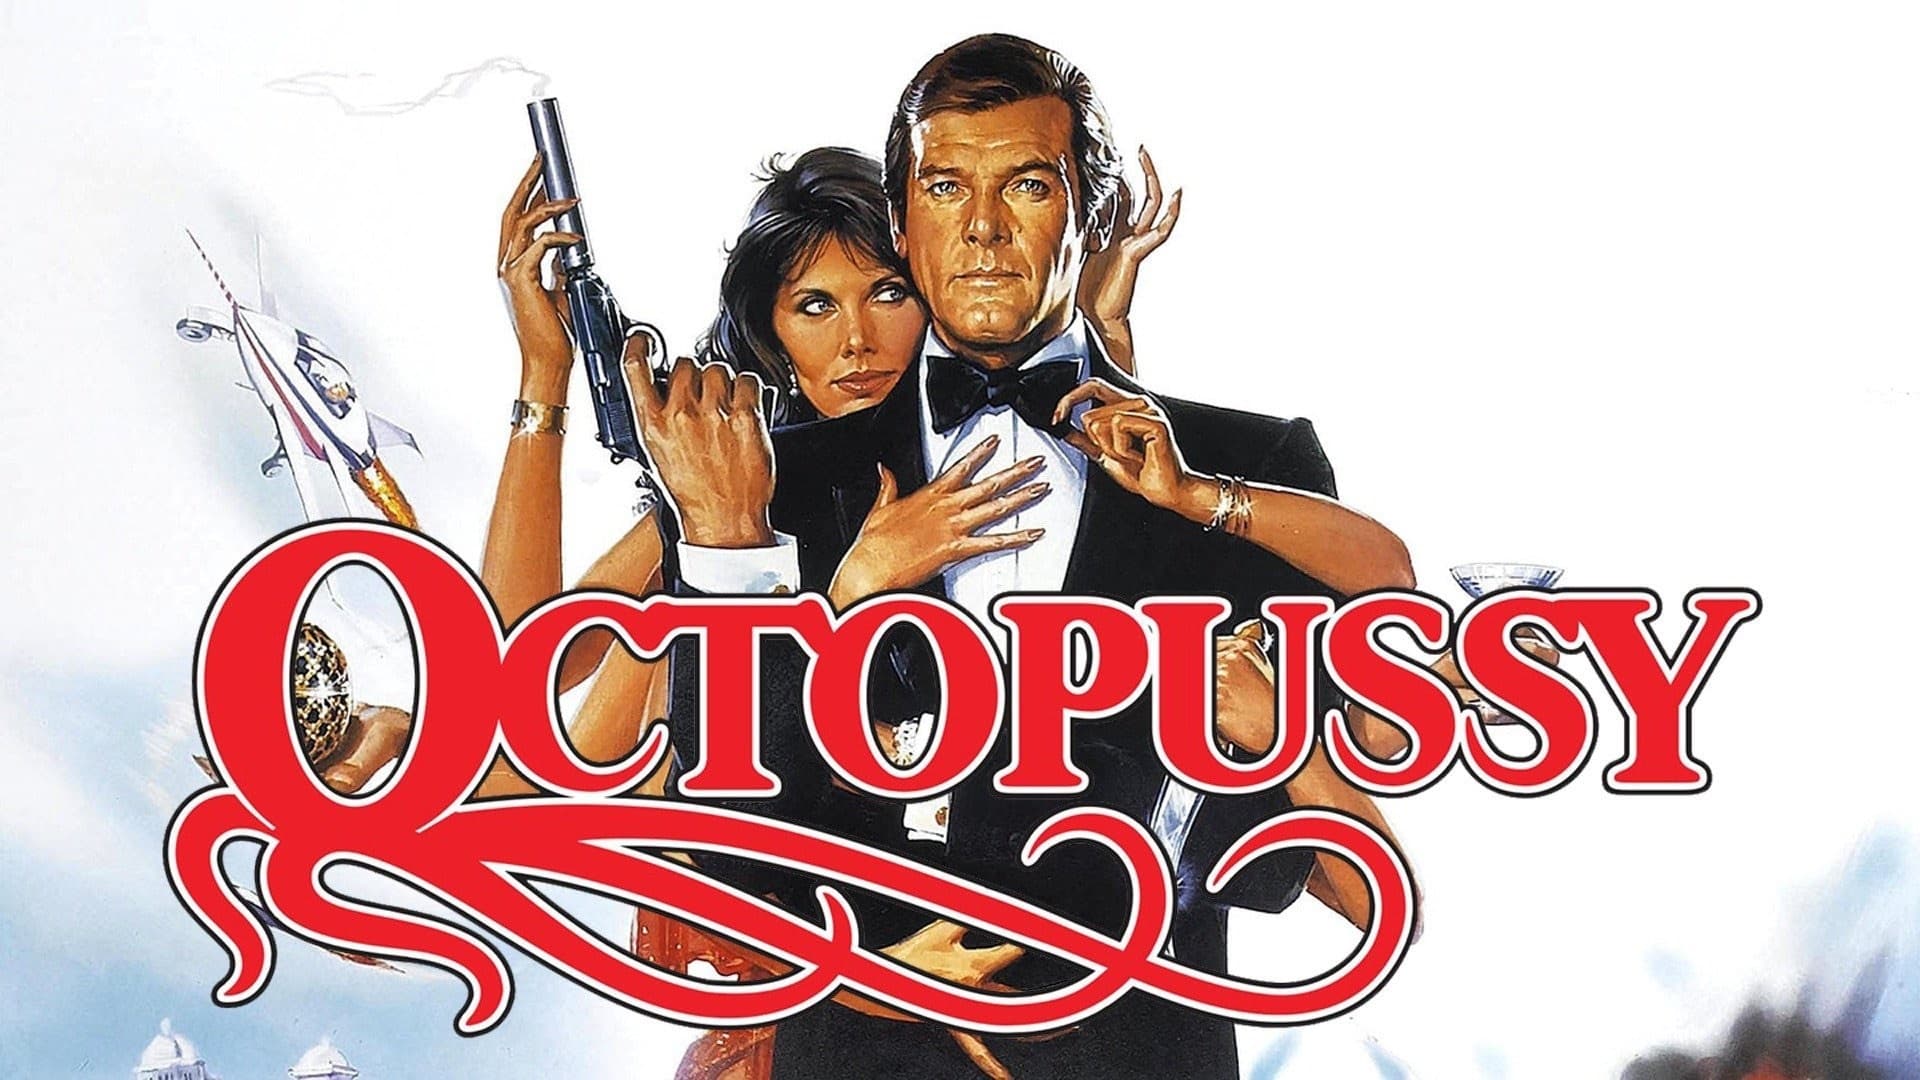 James Bond: Agent 007 i Octopussy